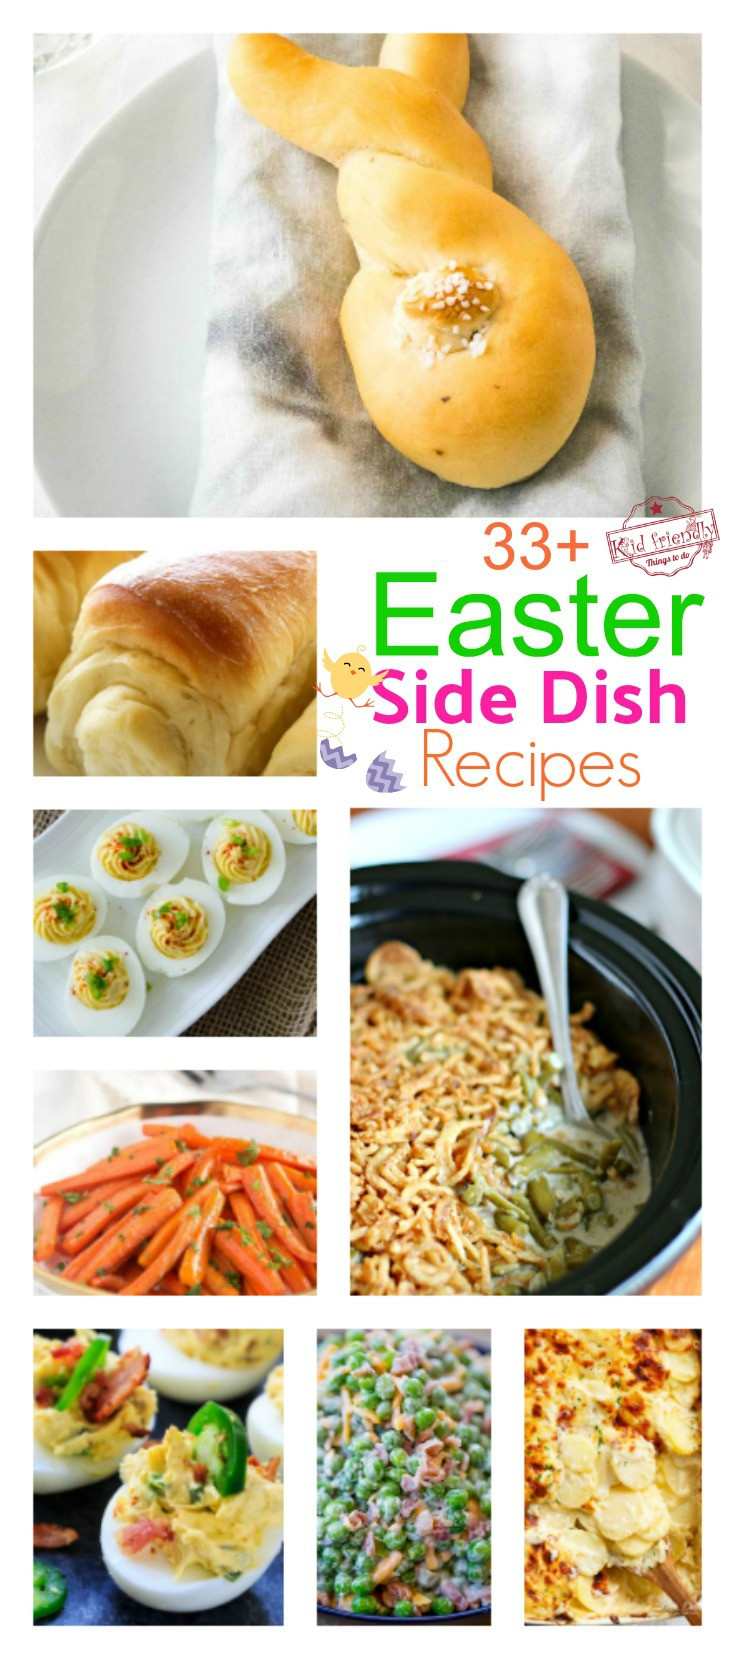 Easter Vegetable Side Dishes
 Over 33 Easter Side Dish Recipes for Your Celebration Dinner